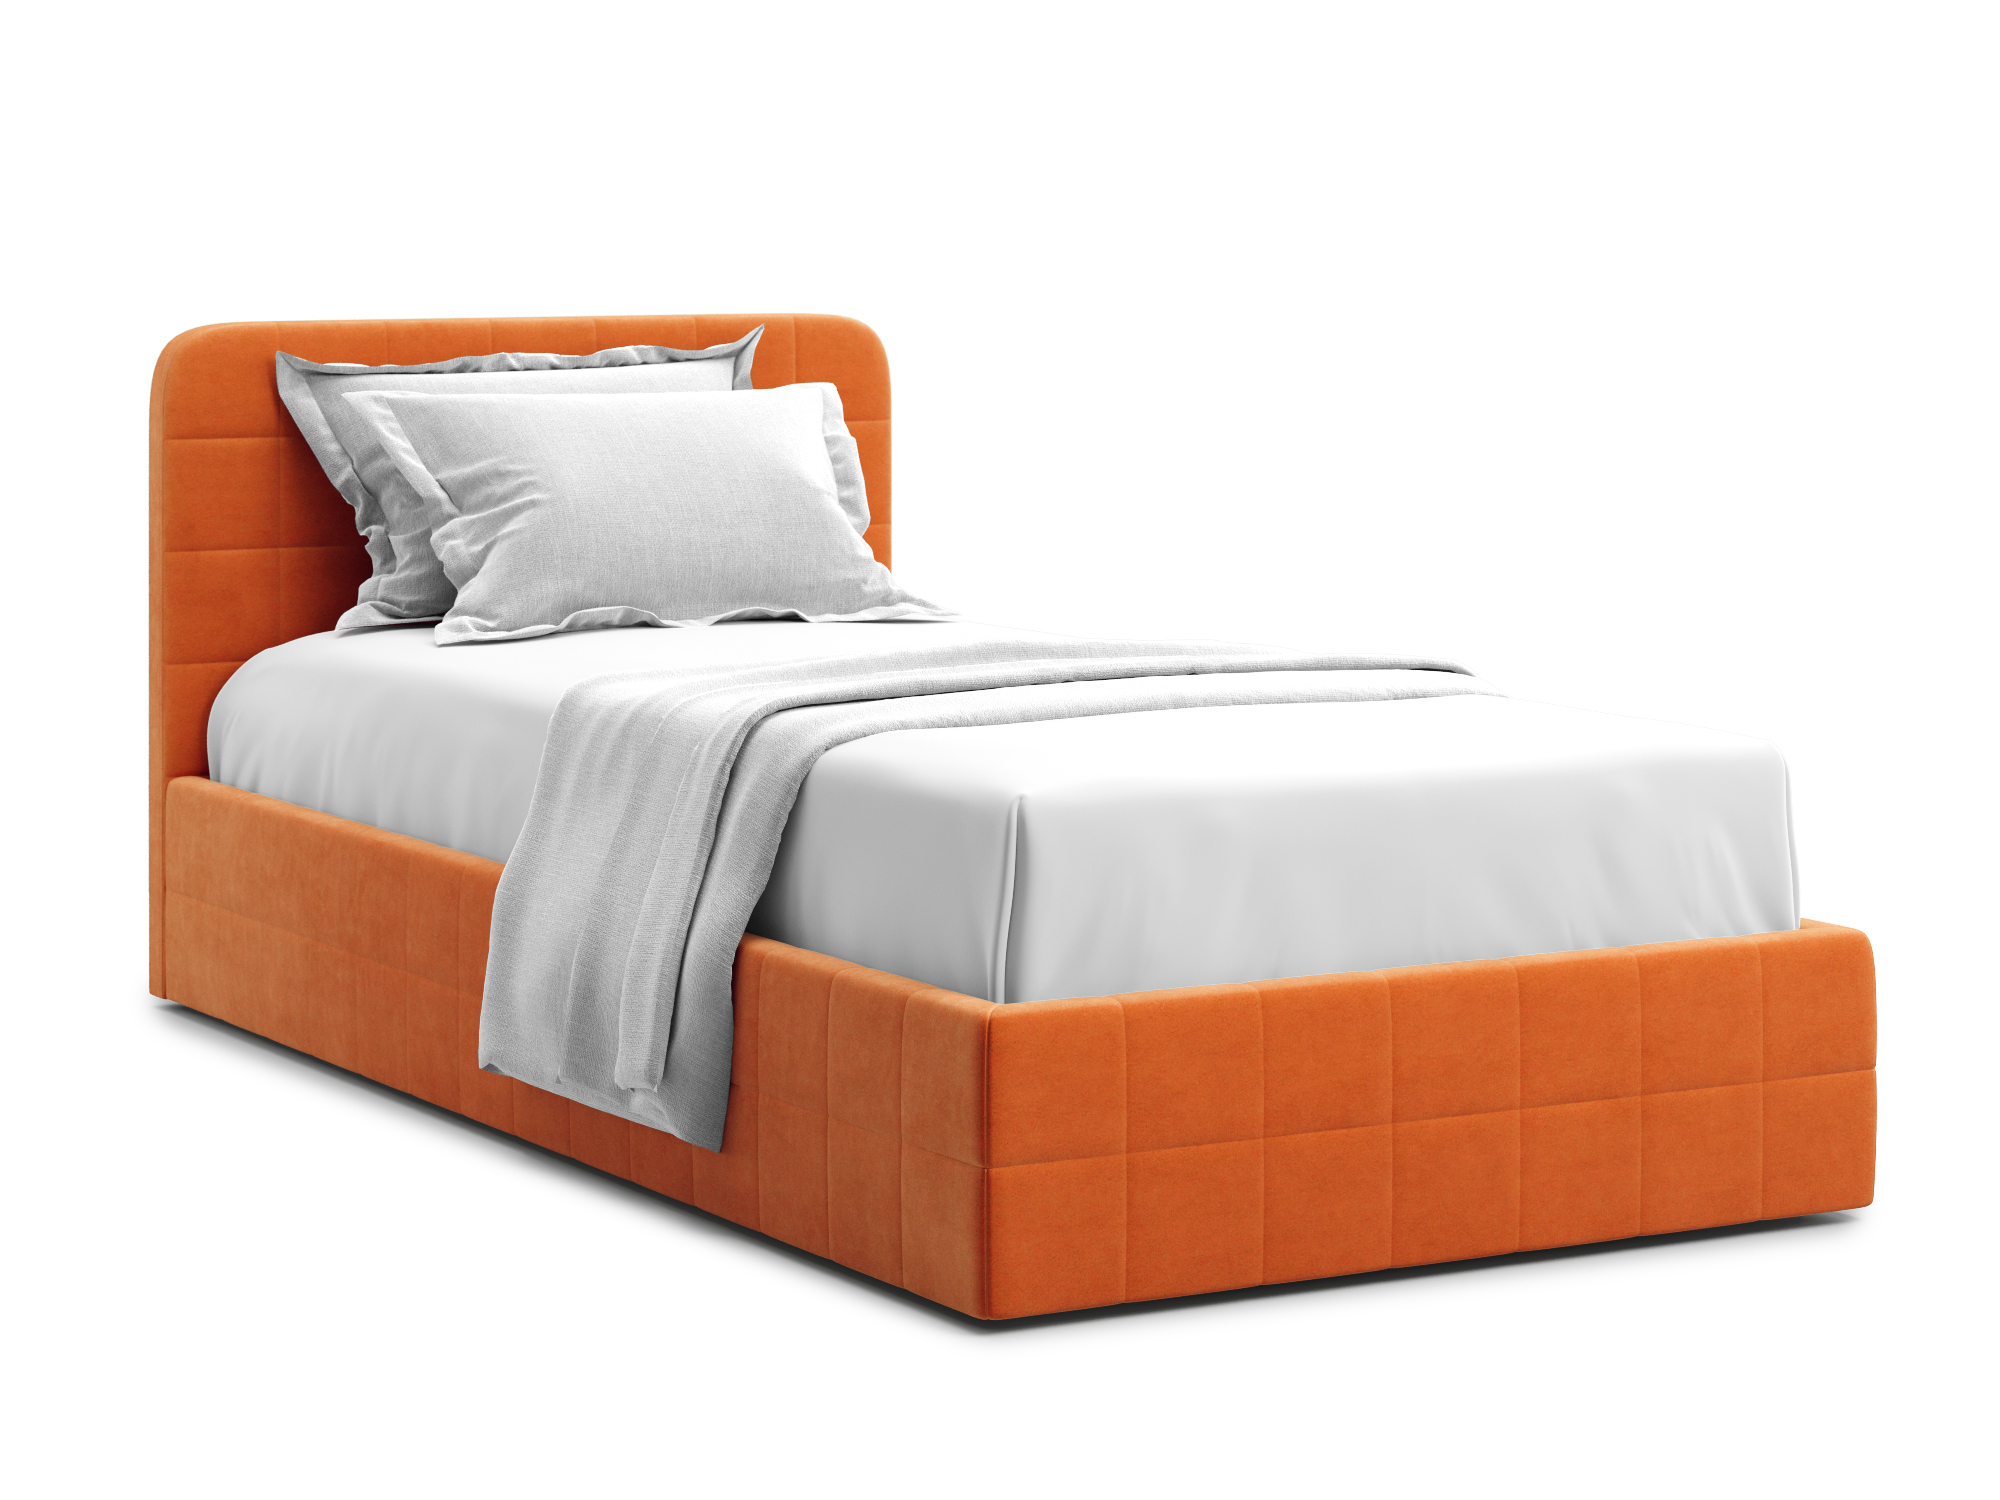 Кровать Adda 90 Velutto 27 Оранжевый, Массив, ДСП кровать adda 120 velutto 27 оранжевый массив дсп